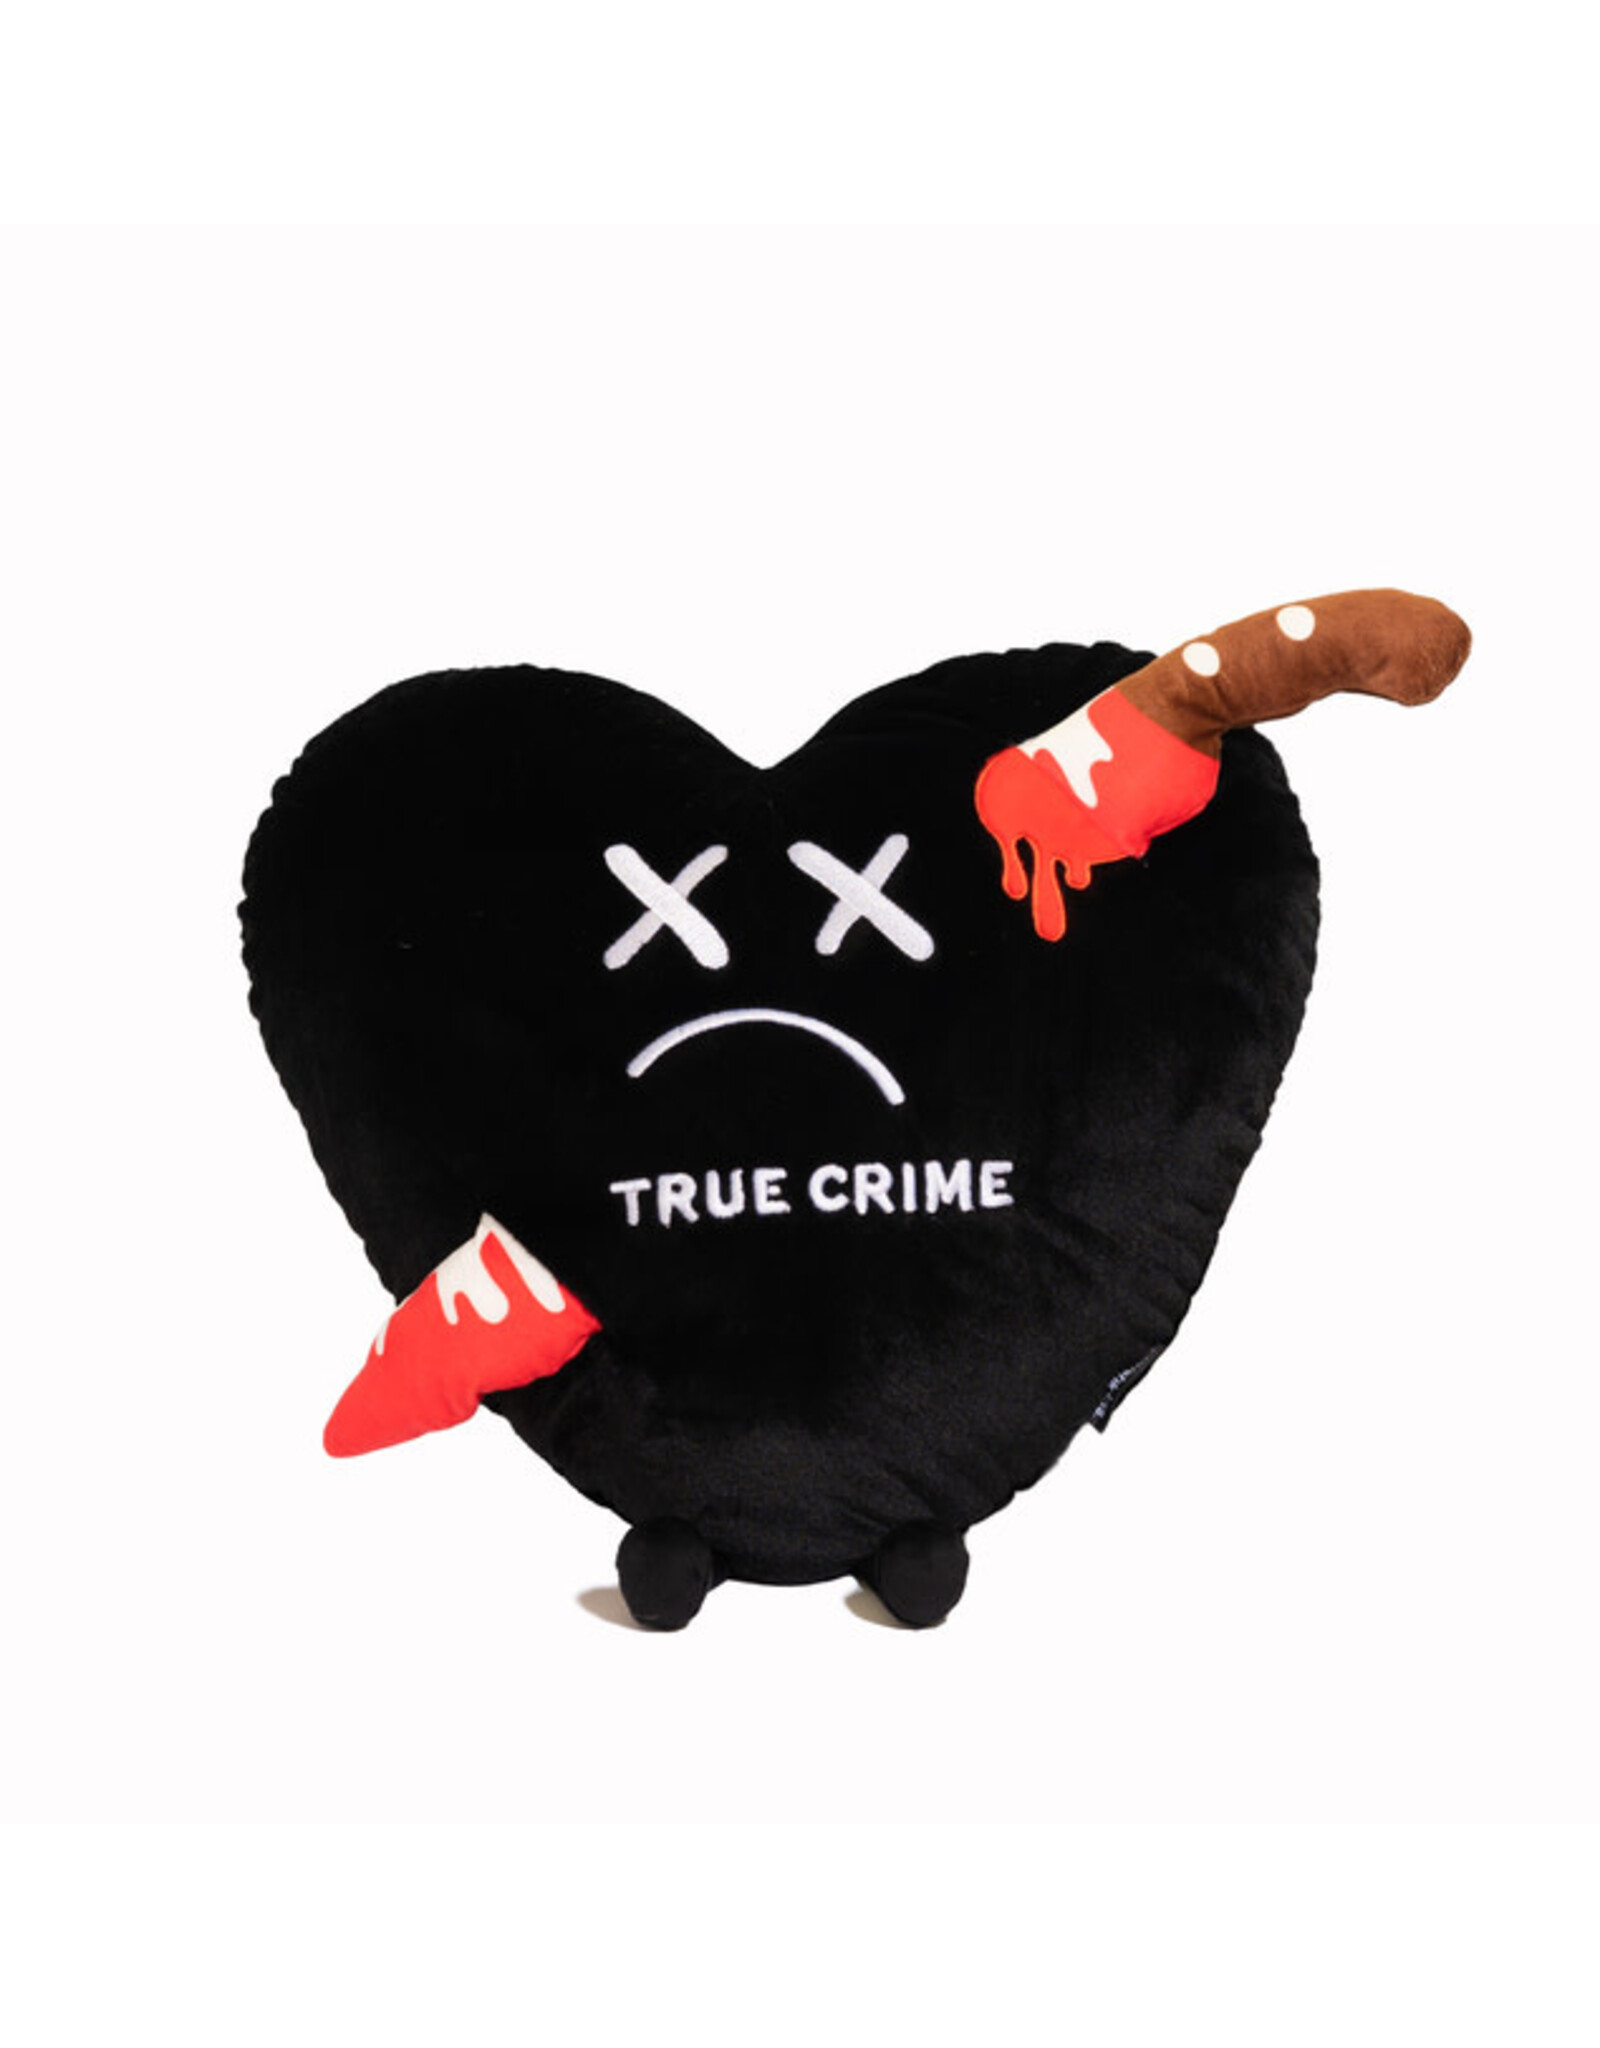 Punchkins Punchkins "True Crime" Puffies XL Pillow